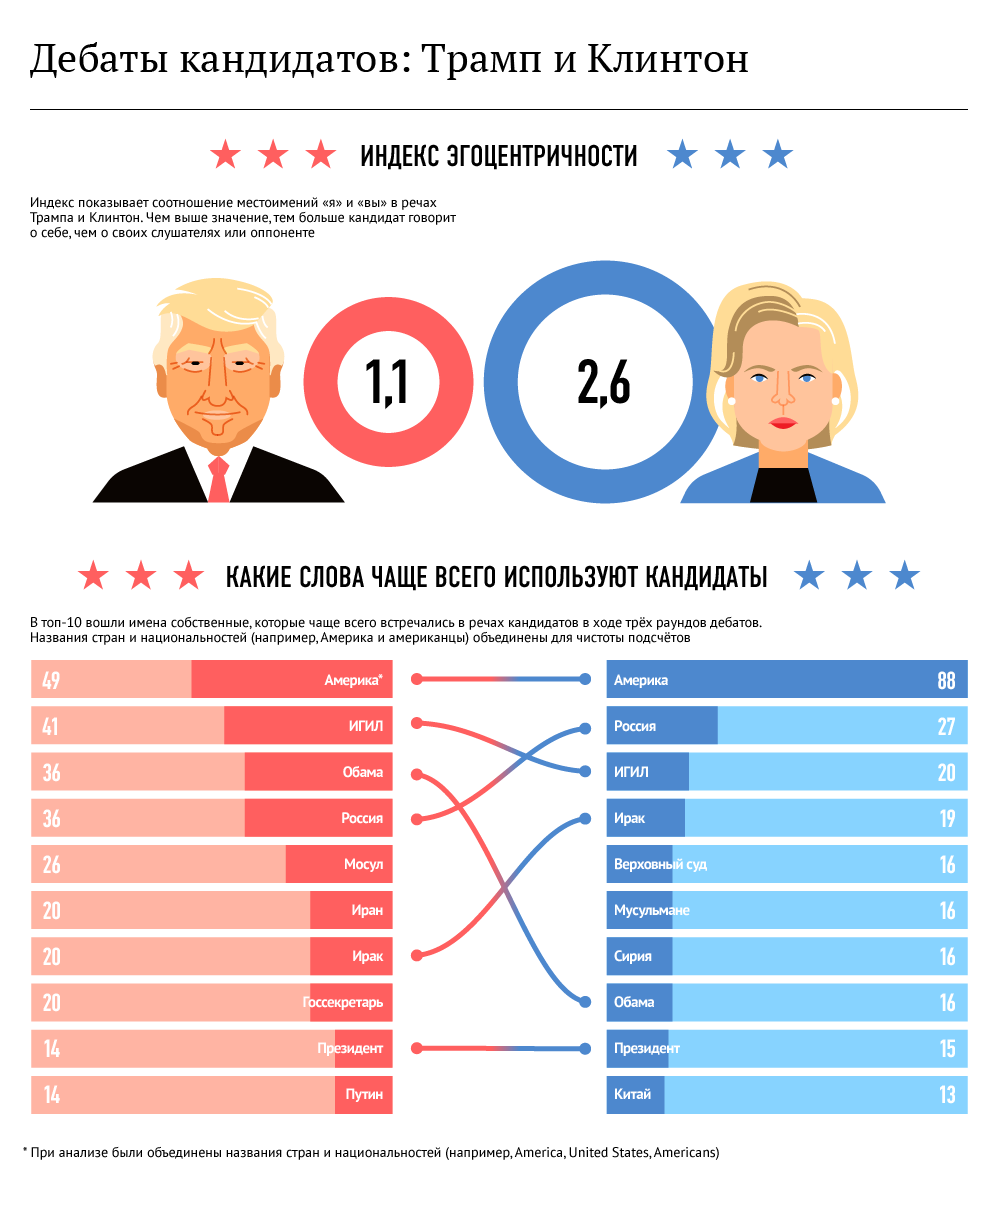 Дебаты кандидатов: Трамп и Клинтон